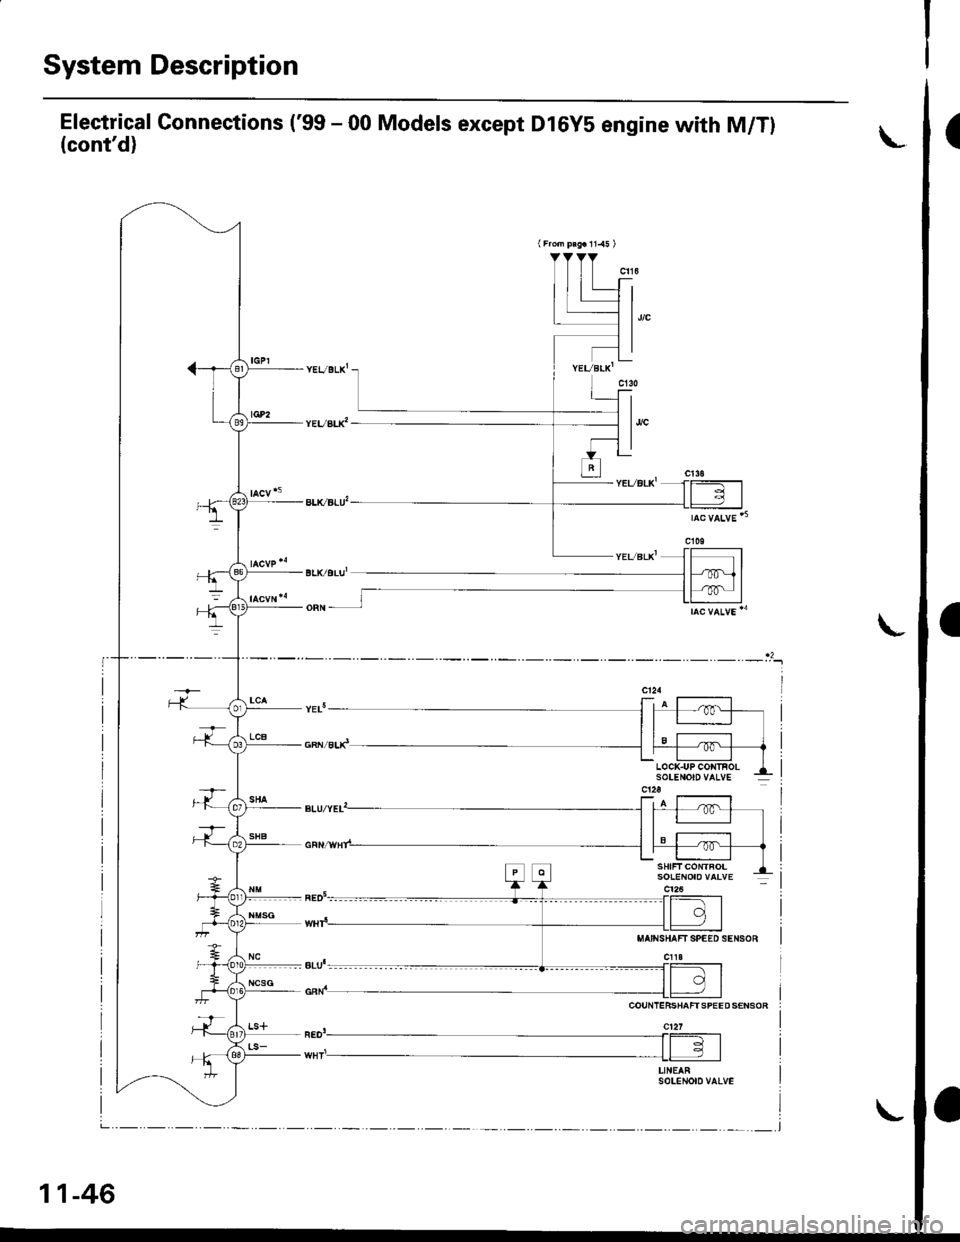 HONDA CIVIC 1998 6.G Workshop Manual System Description
Electrical Connections (99 - 00 Models except Dl6Y5 engine with M/Tl
(contd)
cl09
racvP*{- BLK/eLu-lqt
pl
MAINSHAFT SPEEO SENSOR
clla
COUNIERSHAFTSPEED SENSOR
c121
tt I I
UNEARSO